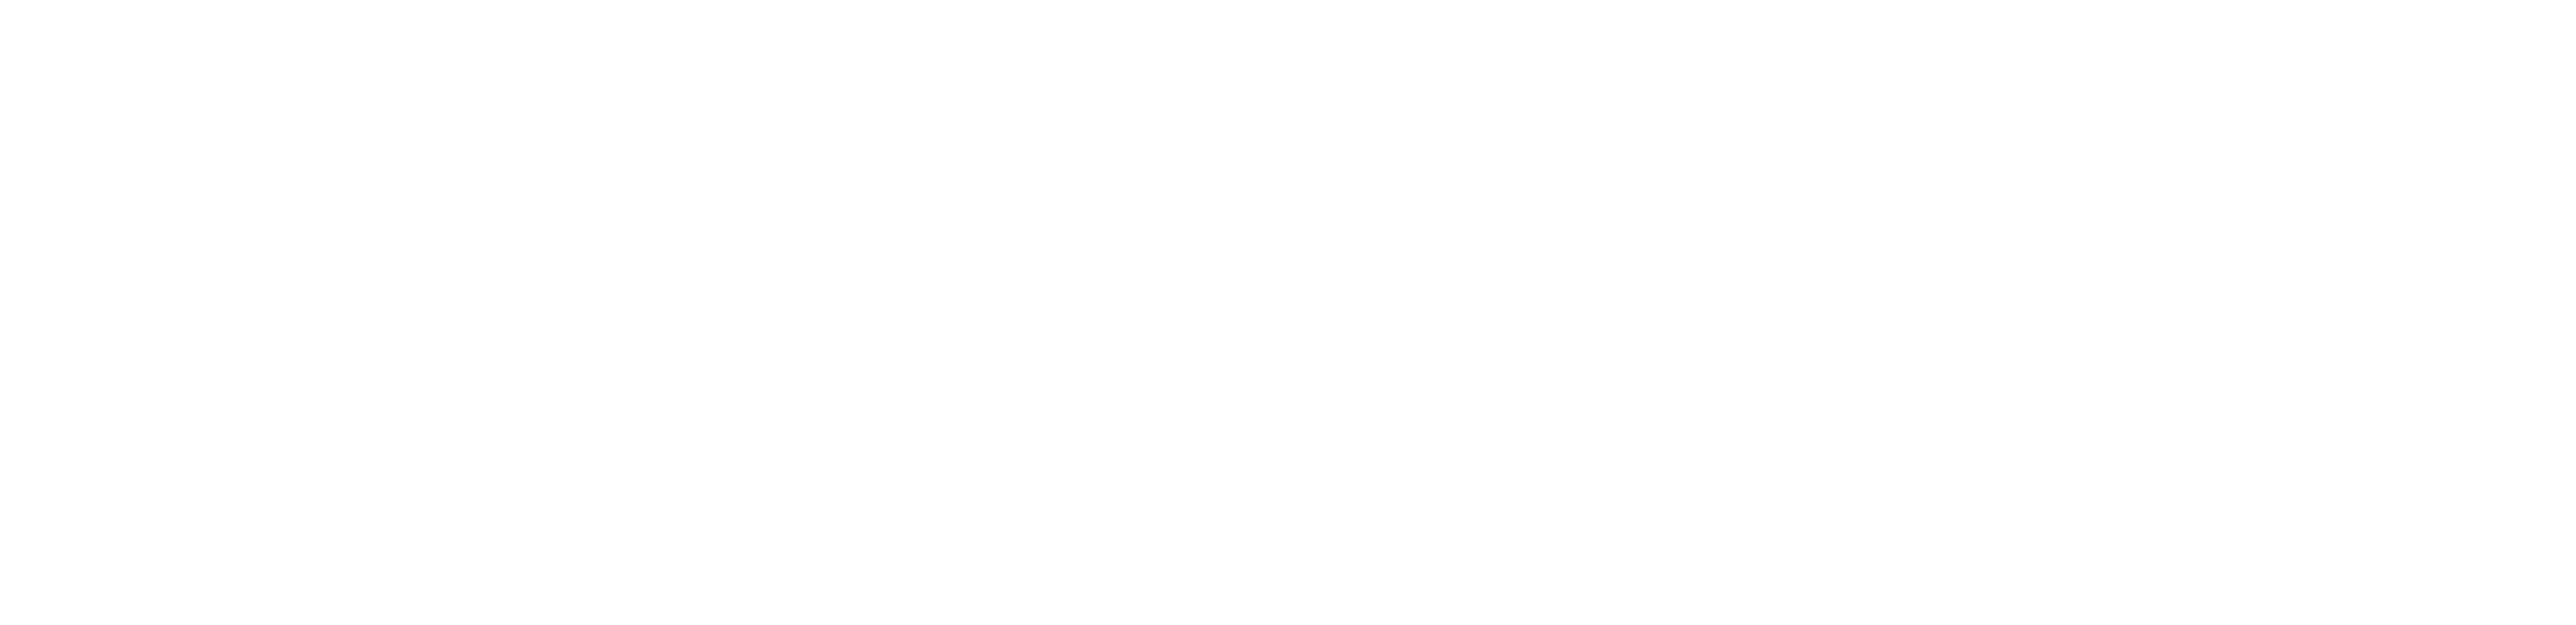 Dock X White